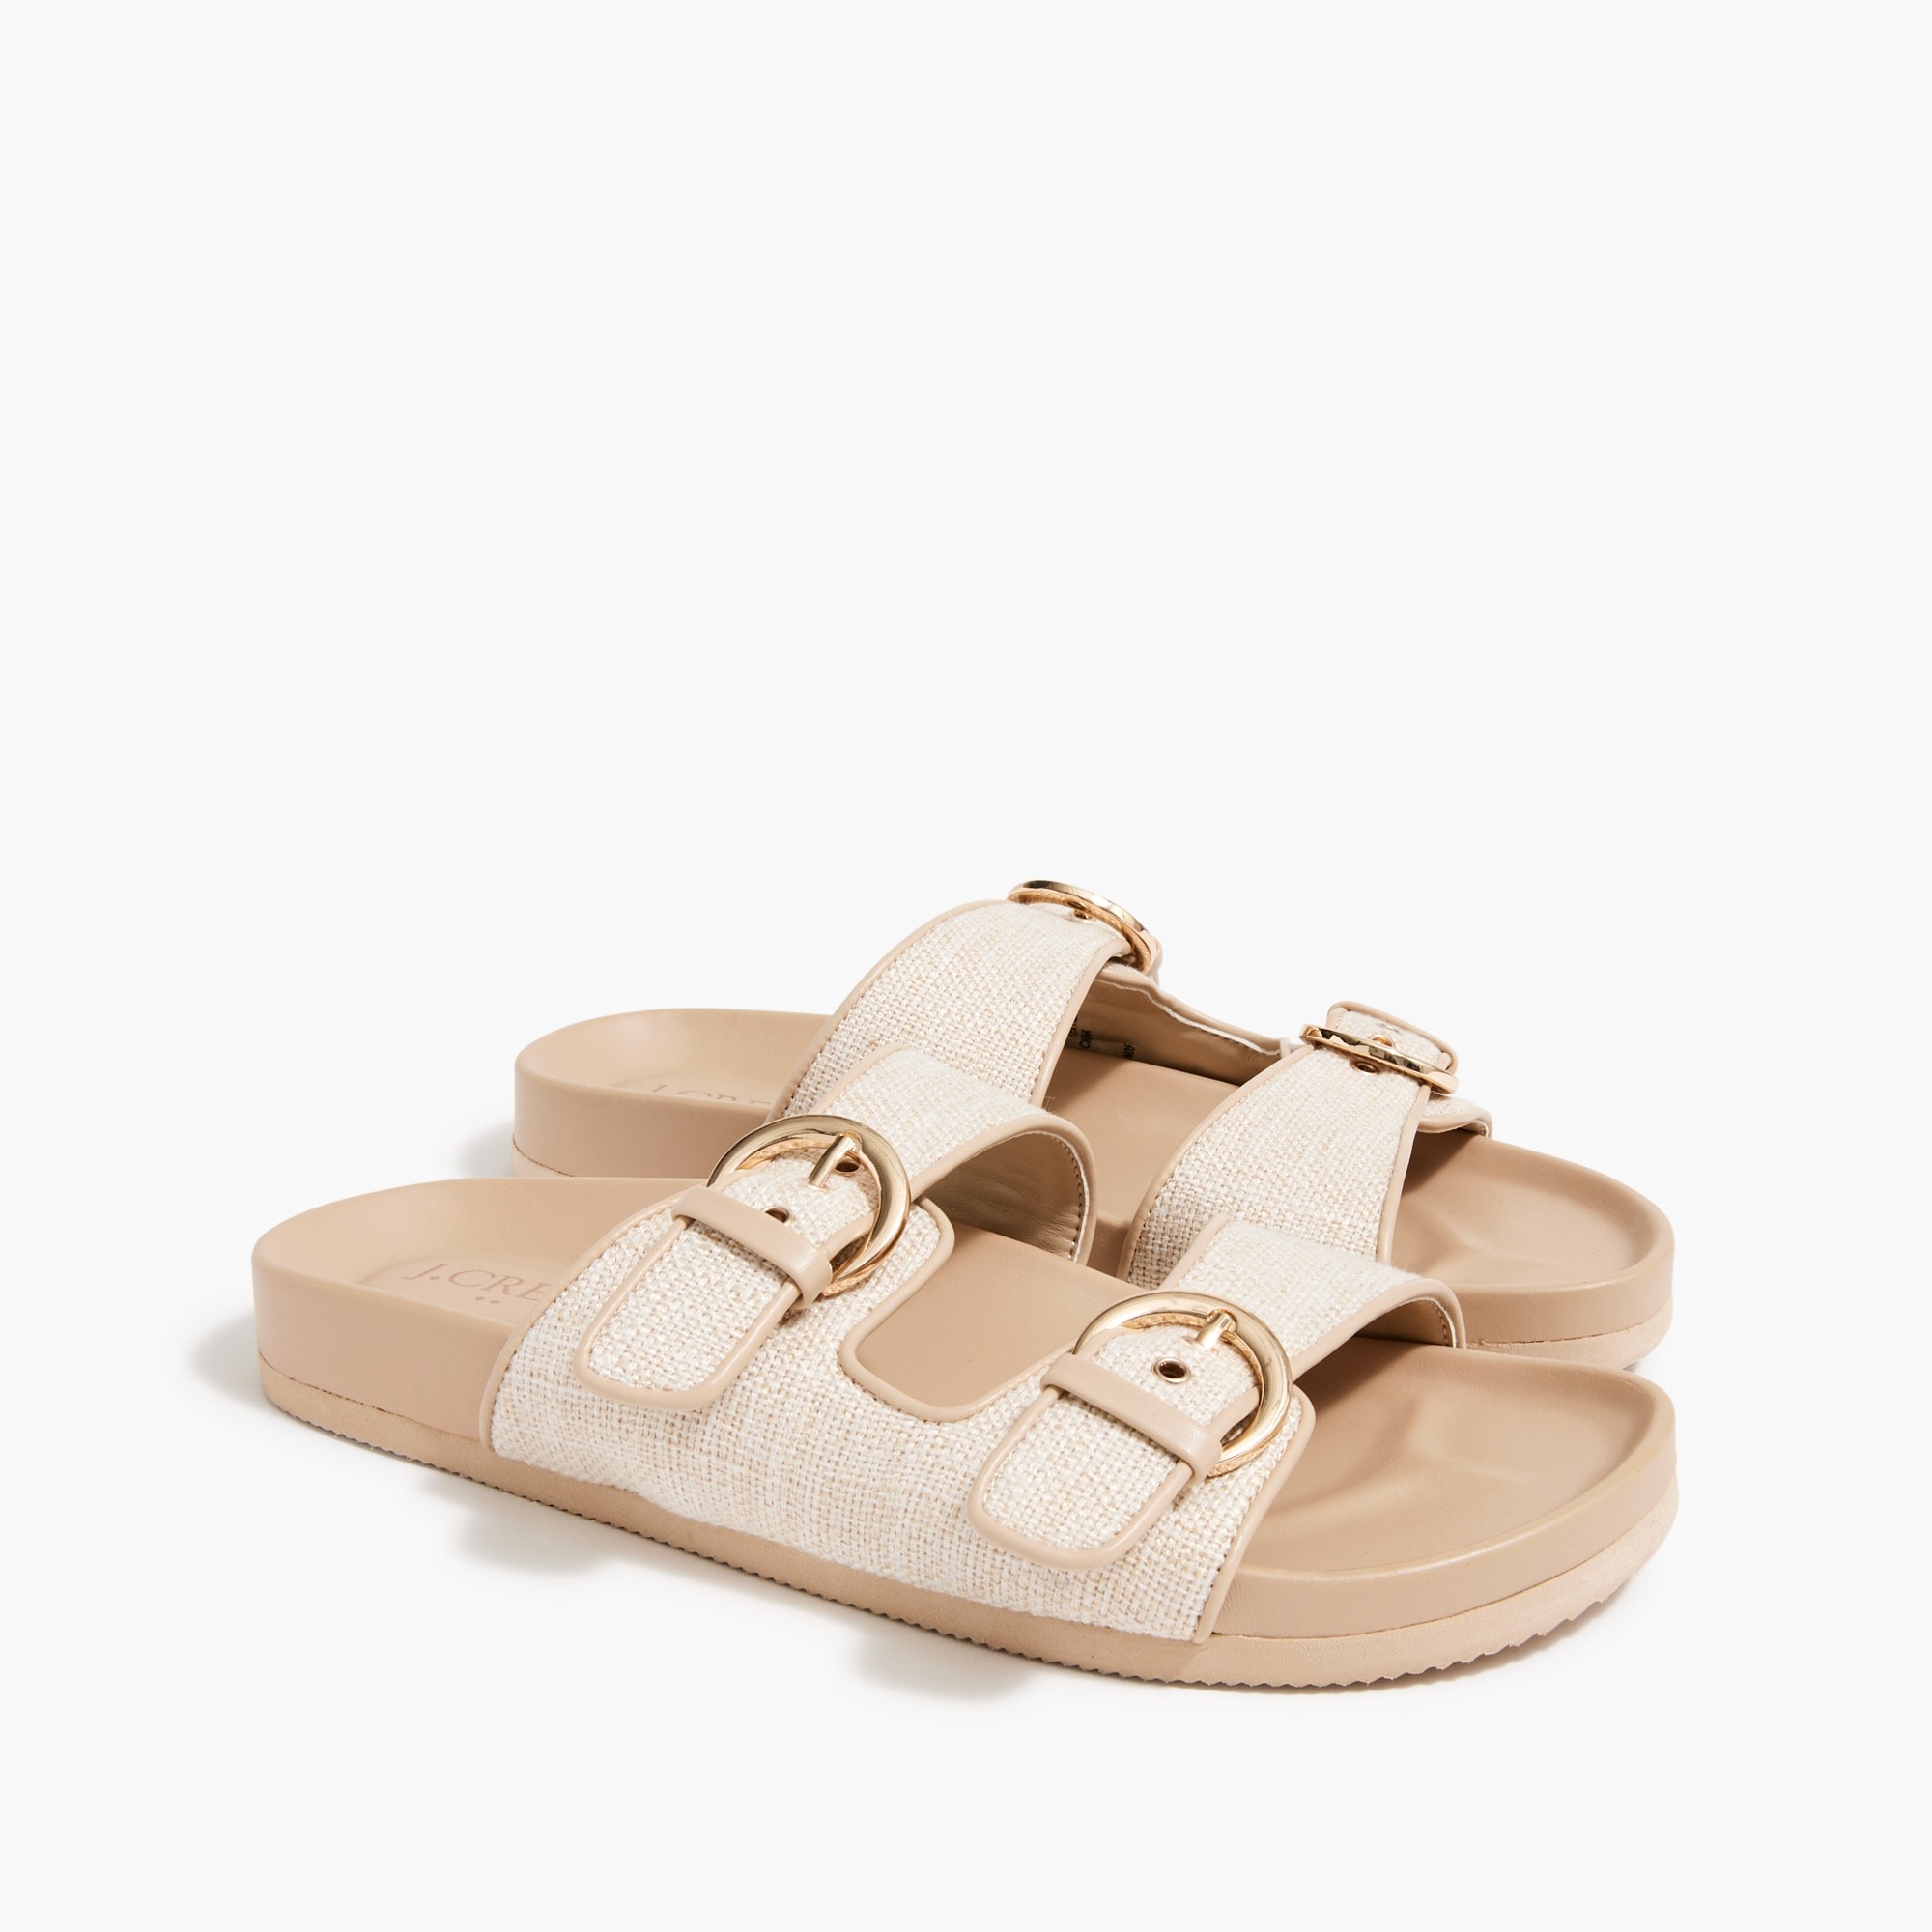  Double-buckle slide sandals